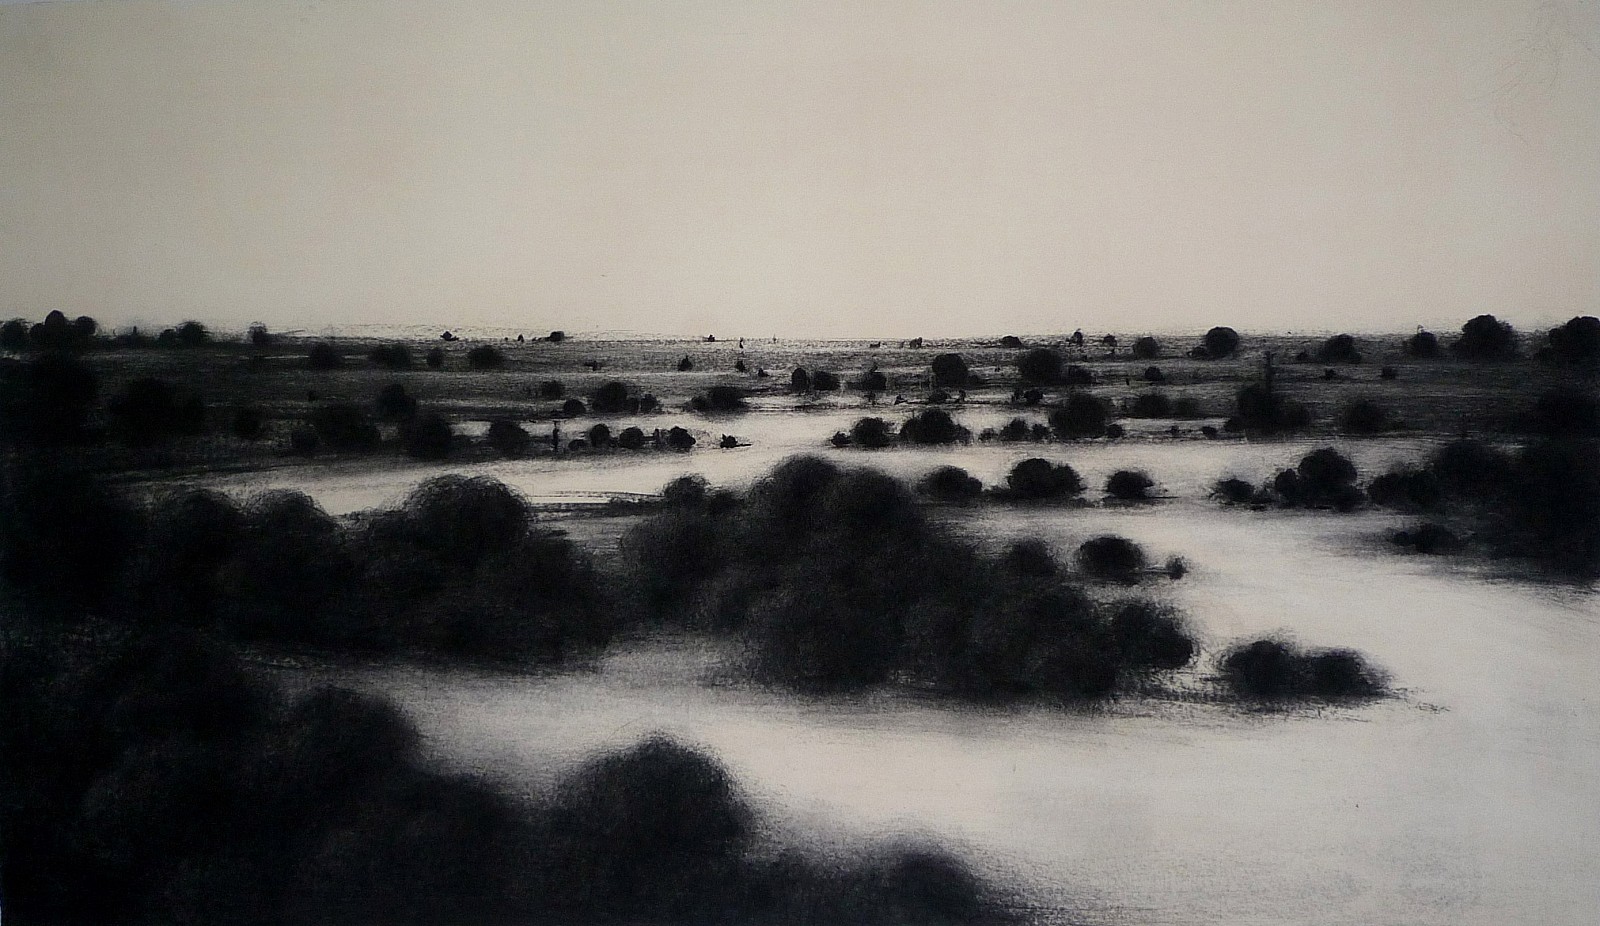 Nicolas Poignon
Emptiness - Horizon, 2012
charcoal on paper, 38 x 65 in.